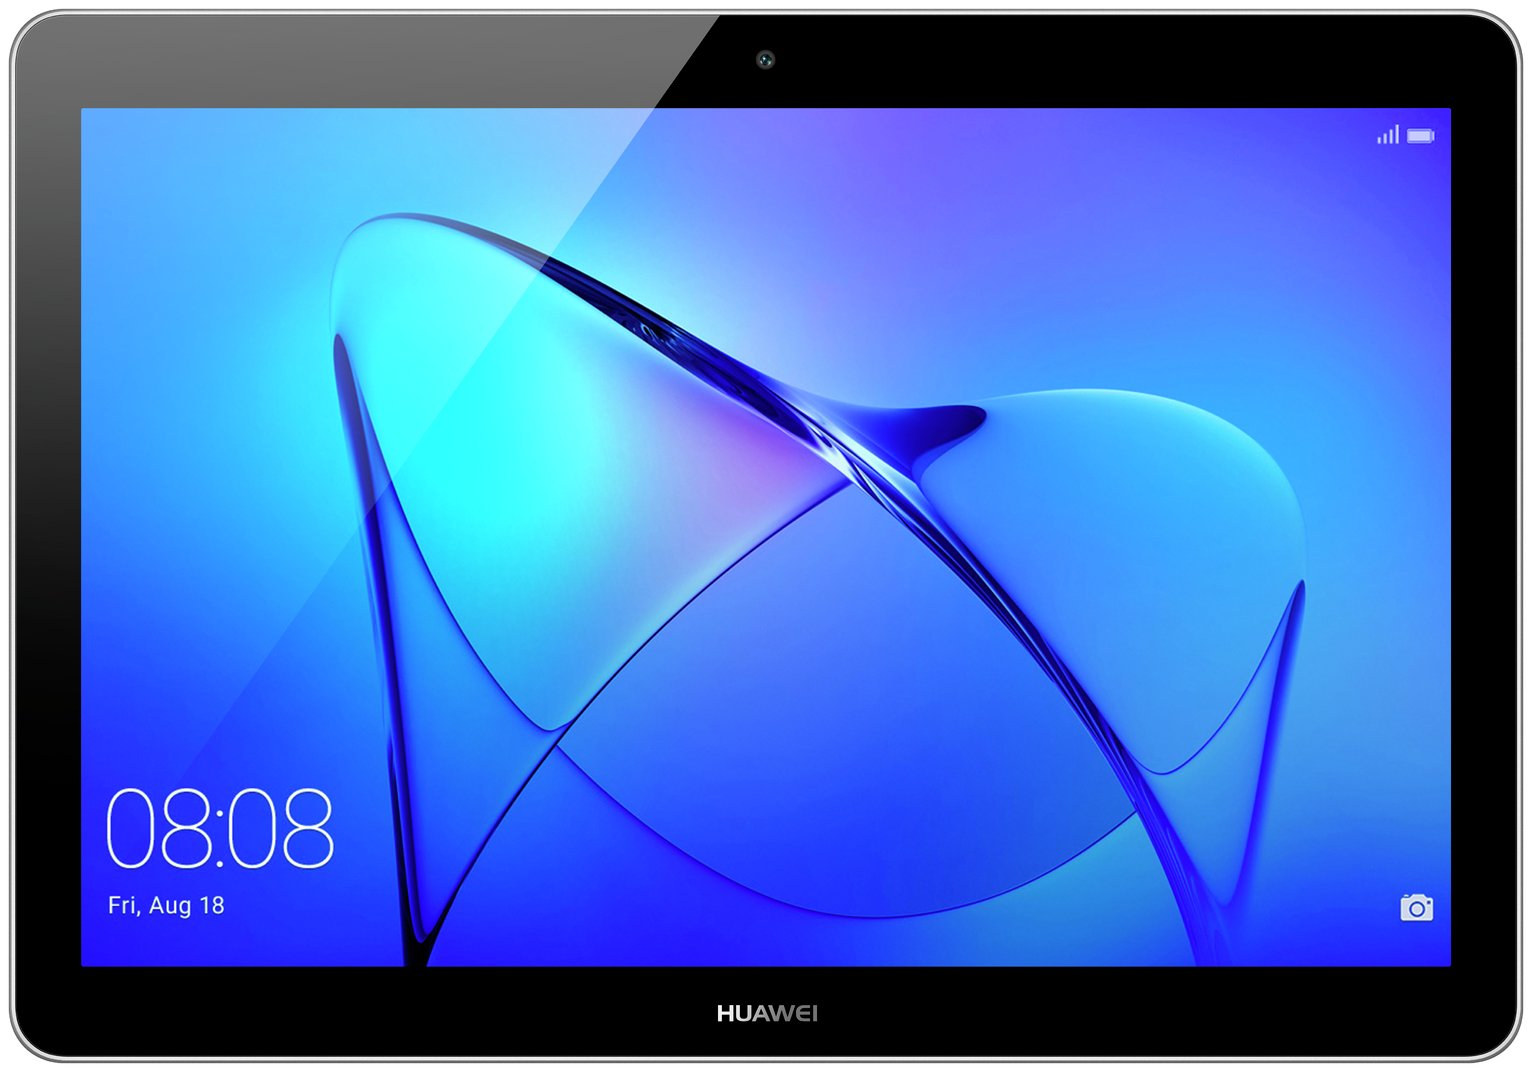 Huawei MediaPad T3 10 Inch 16GB Tablet Review